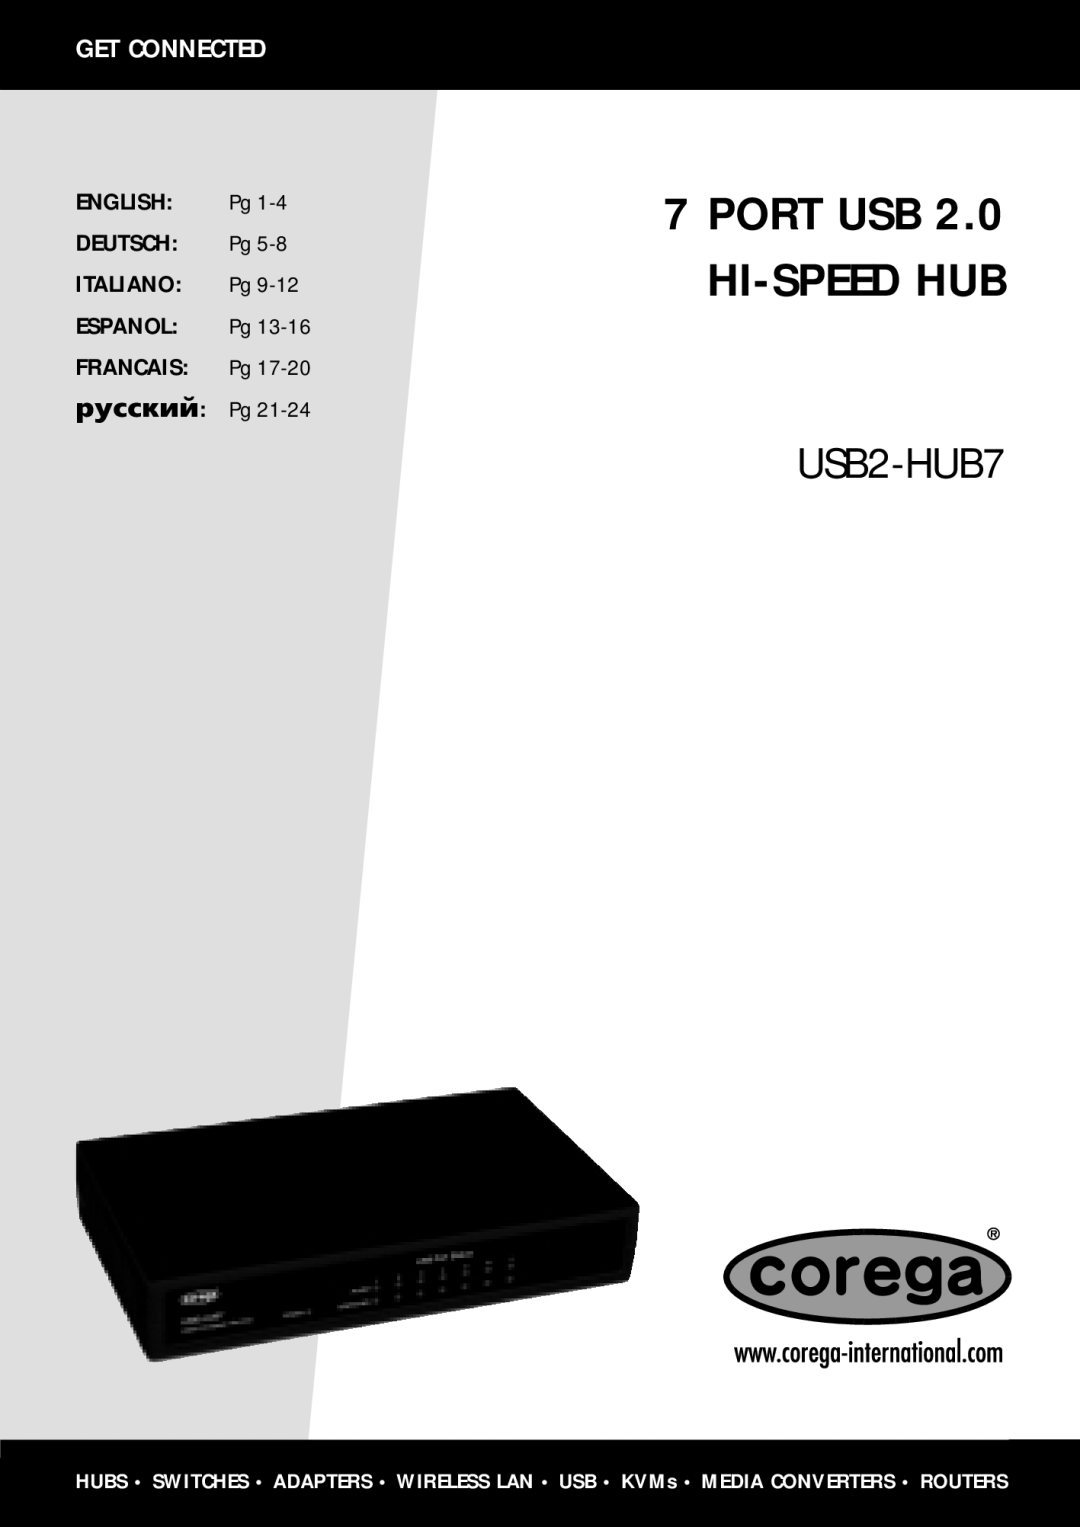 Corega USB2-HUB7 warranty English, Deutsch, Italiano, Espanol, Francais, PORT USB 2.0 HI-SPEED HUB, Get Connected 